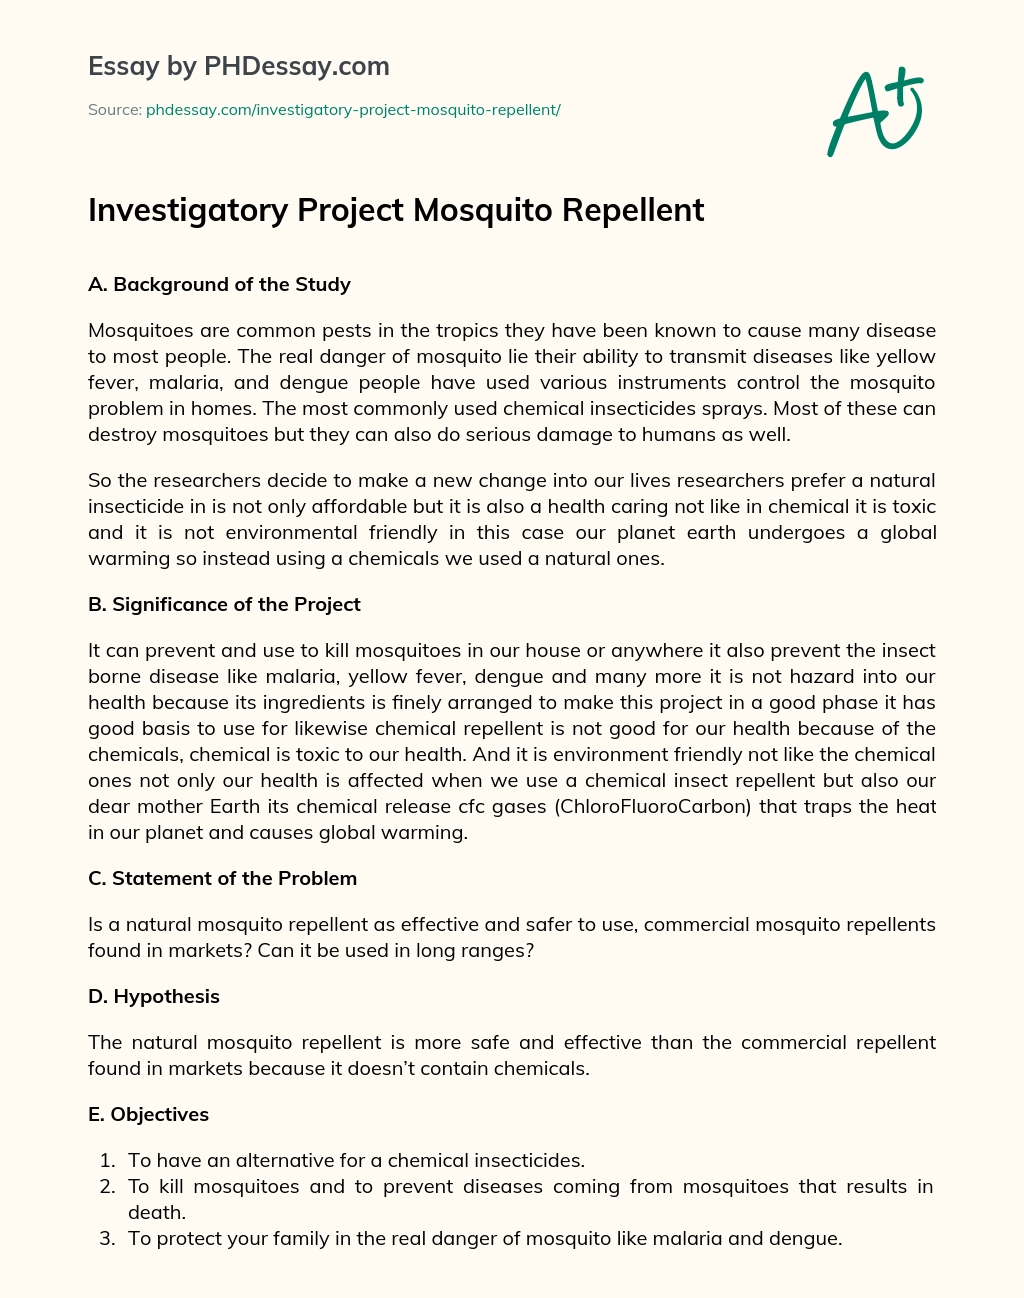 Investigatory Project Mosquito Repellent essay